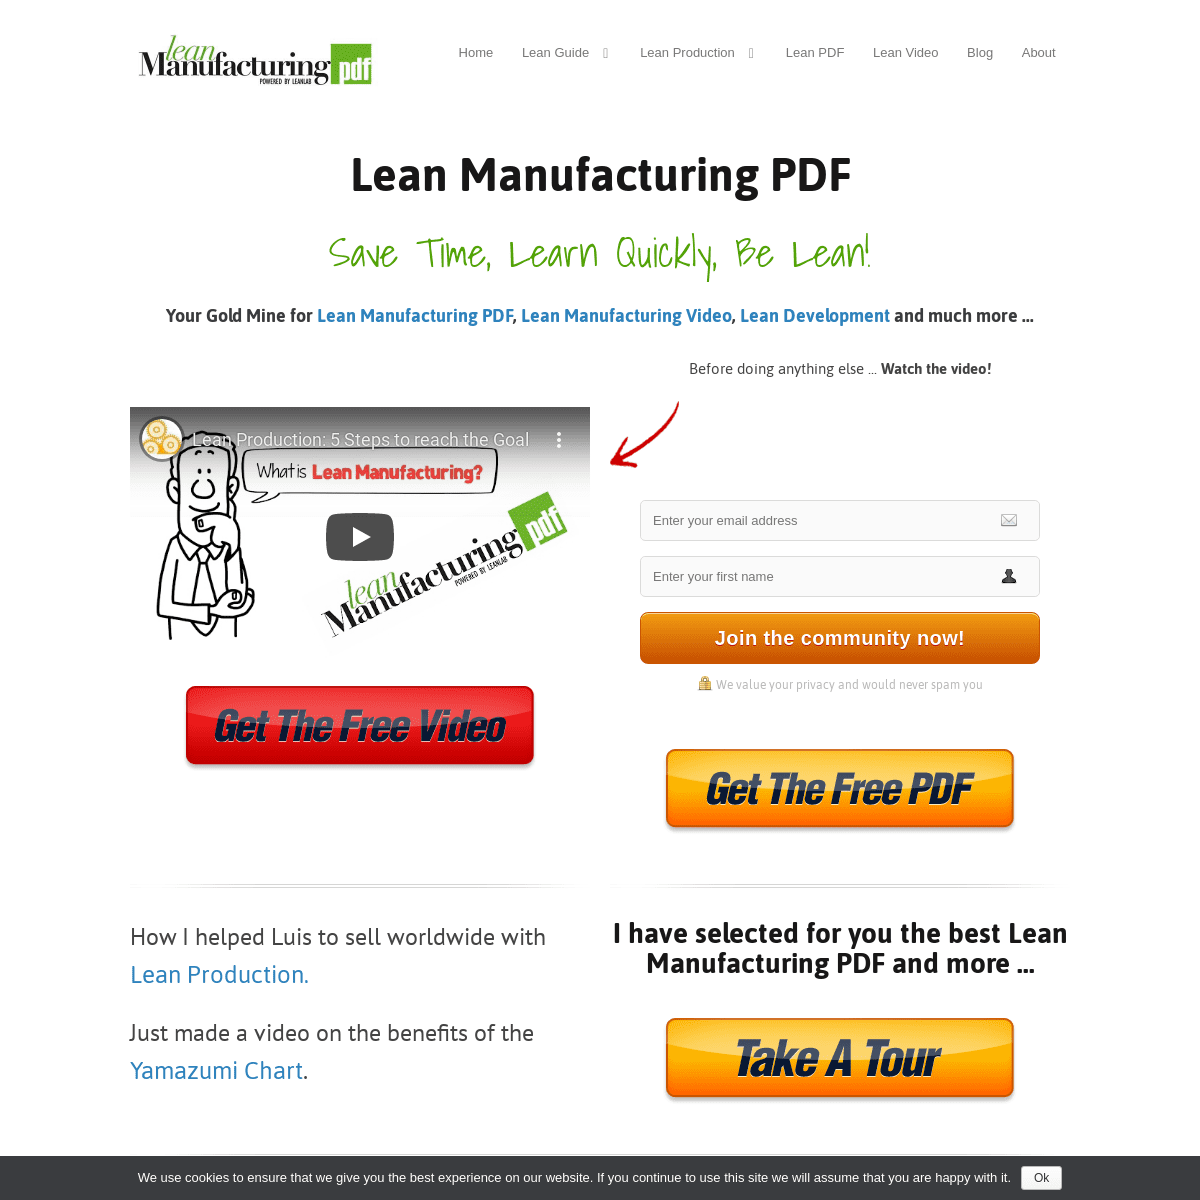 A complete backup of leanmanufacturingpdf.com